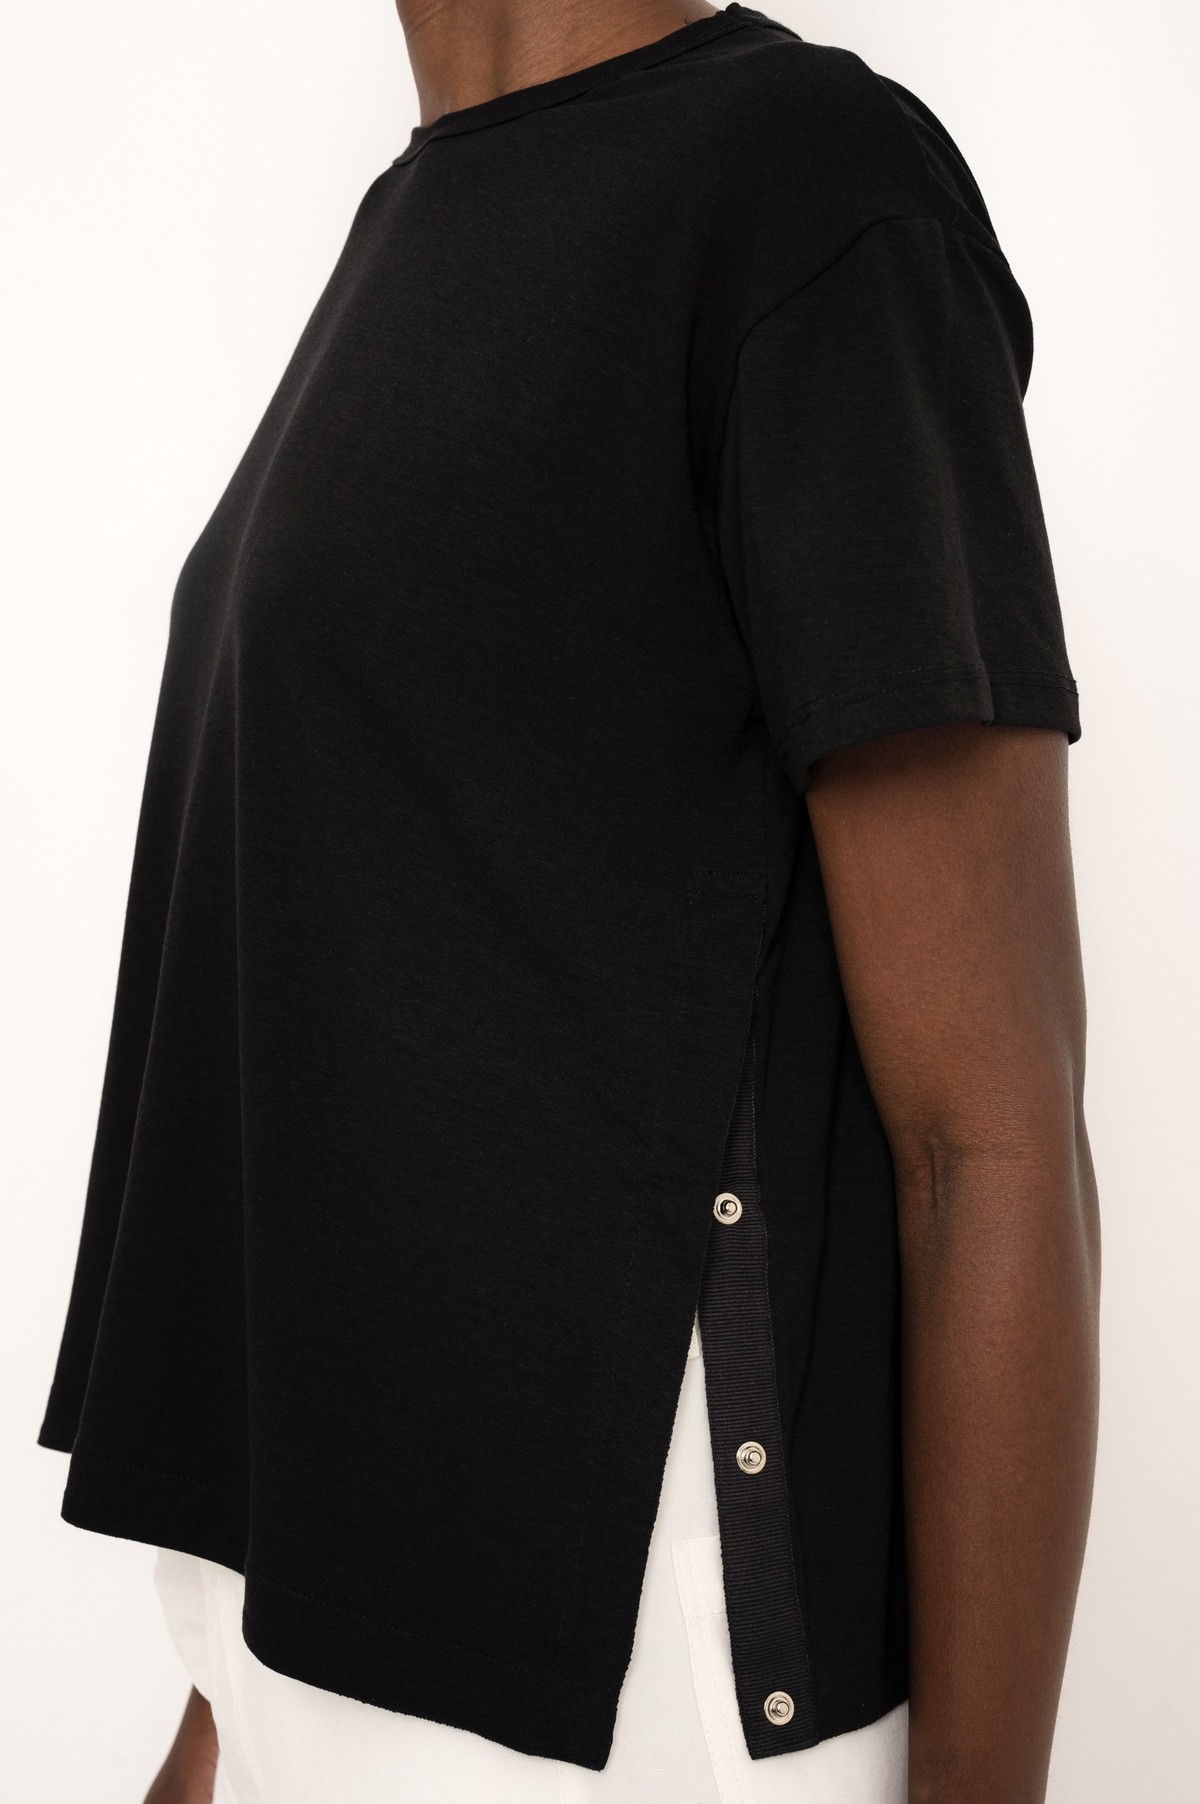 camiseta em liocel com botões na lateral | lyocell cotton t-shirt with side buttons